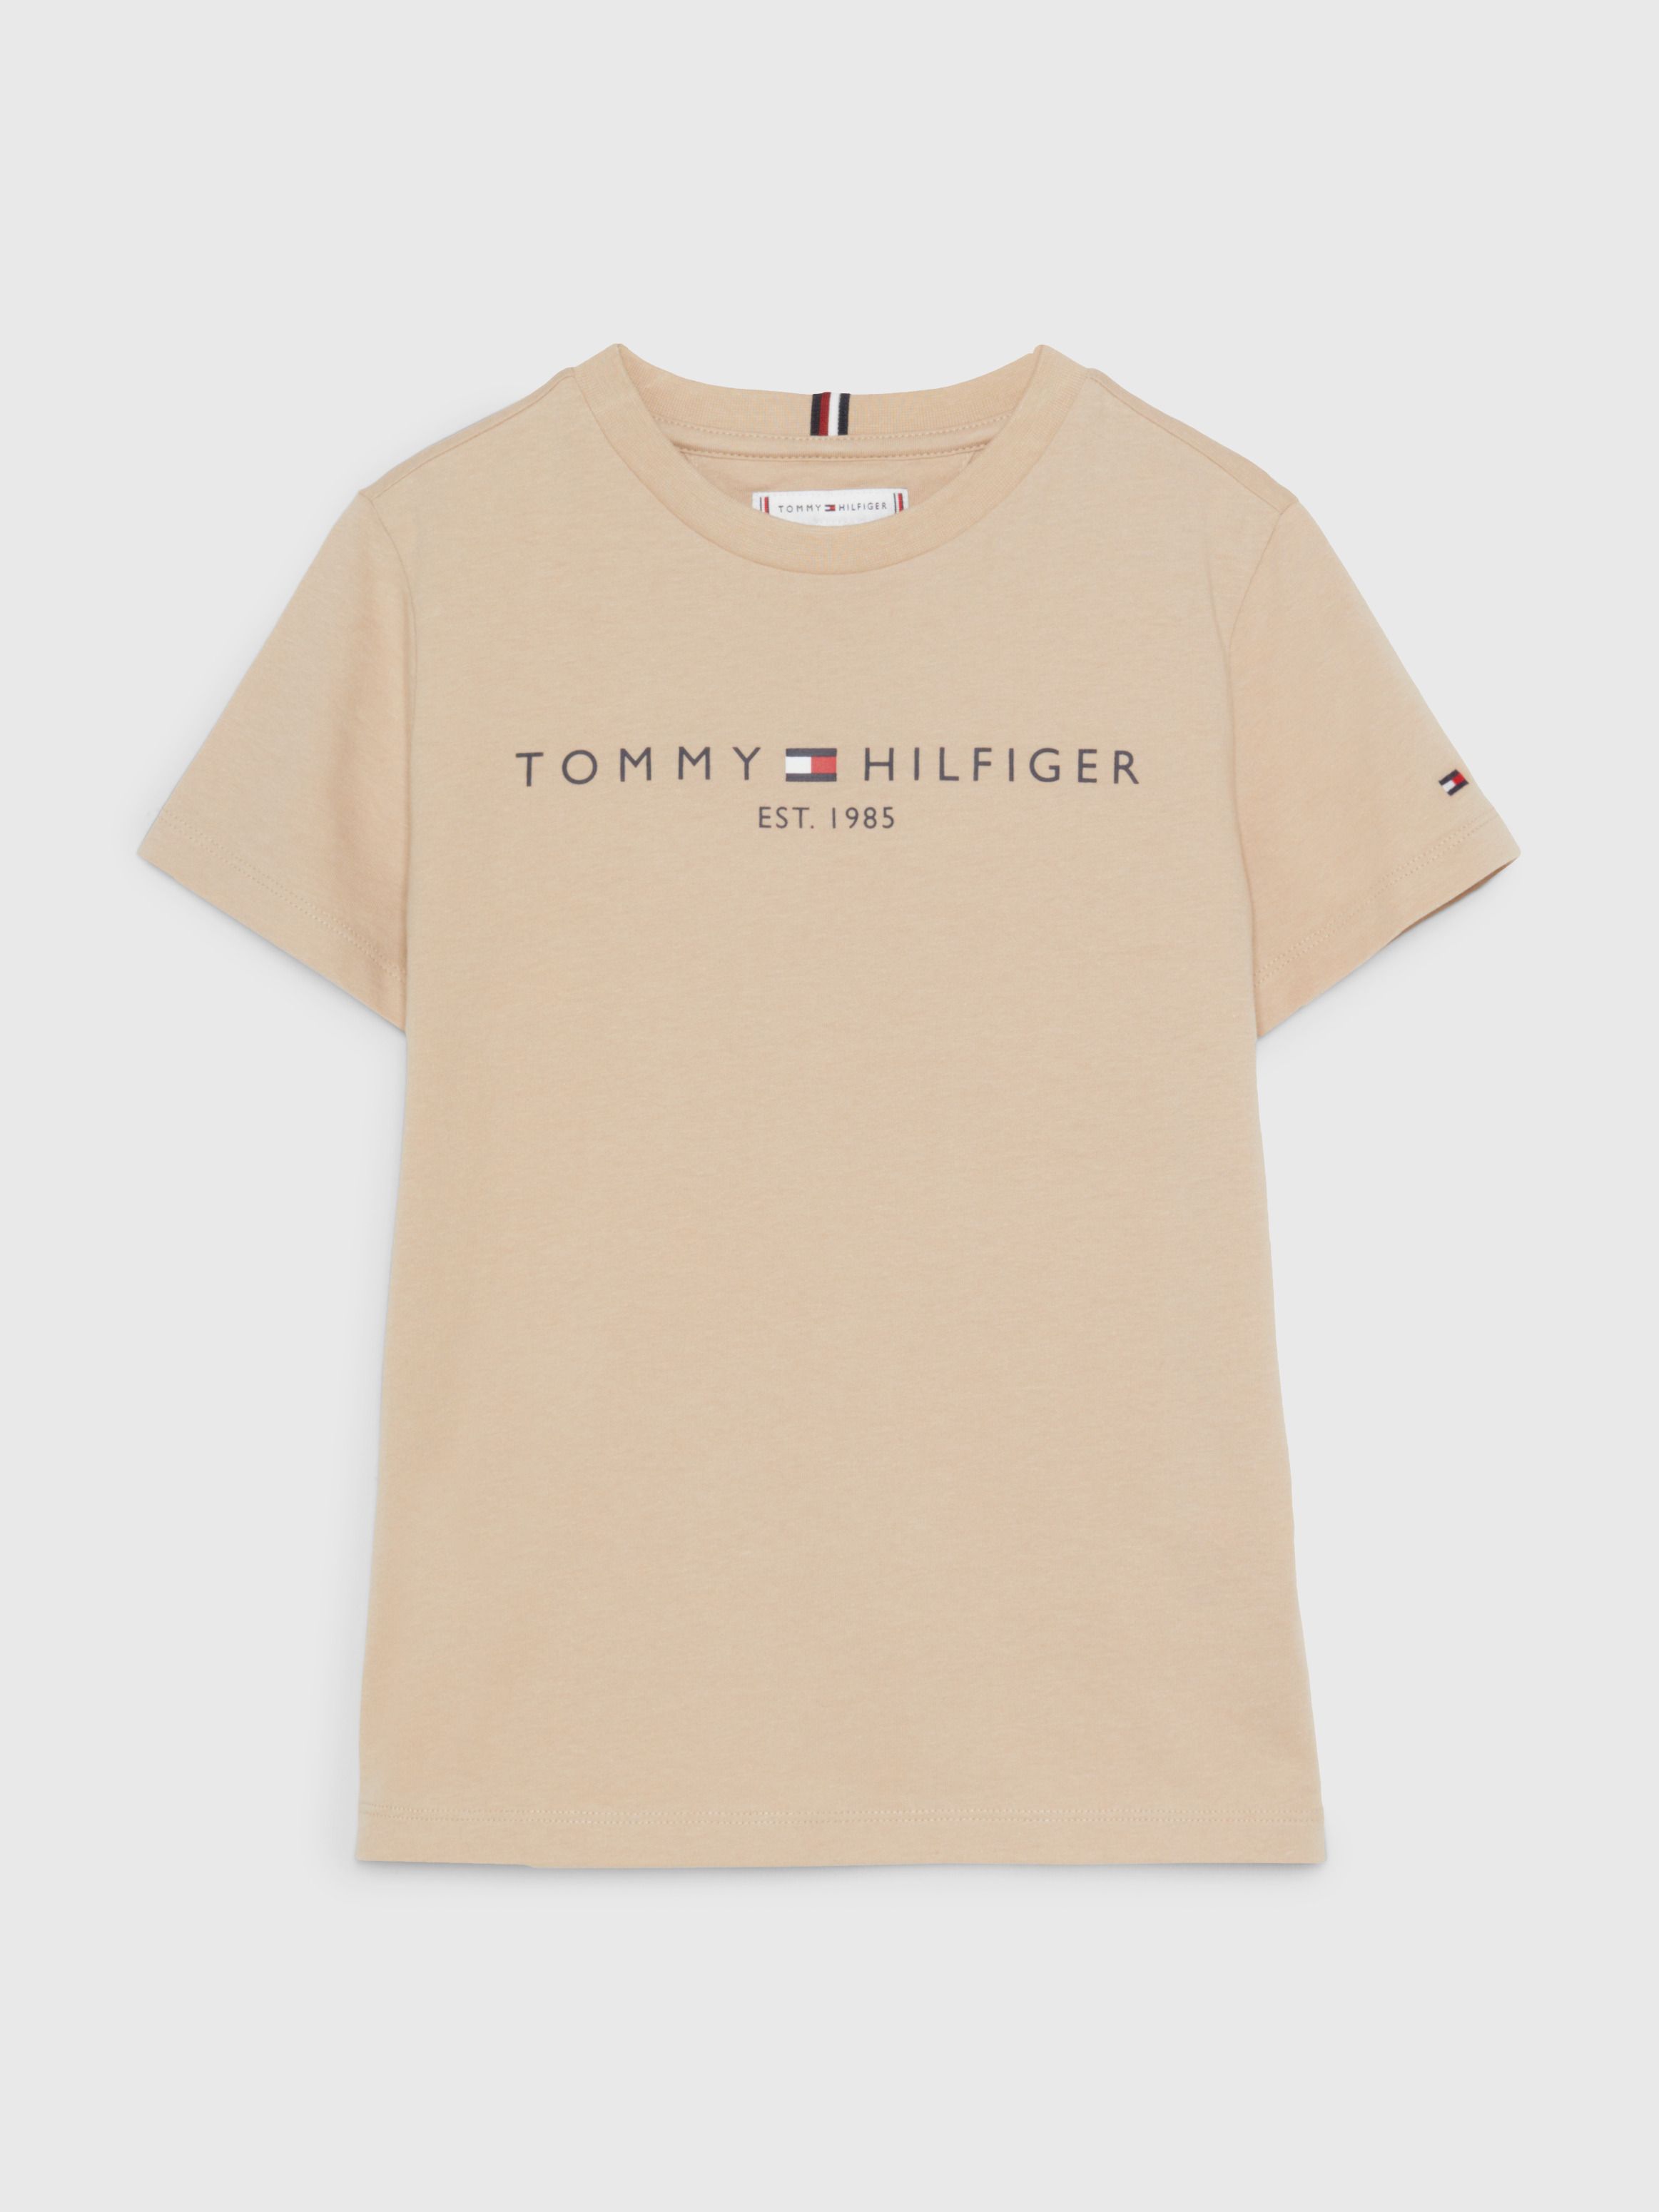 Dual Gender TH Established Essential T-Shirt | Tommy Hilfiger